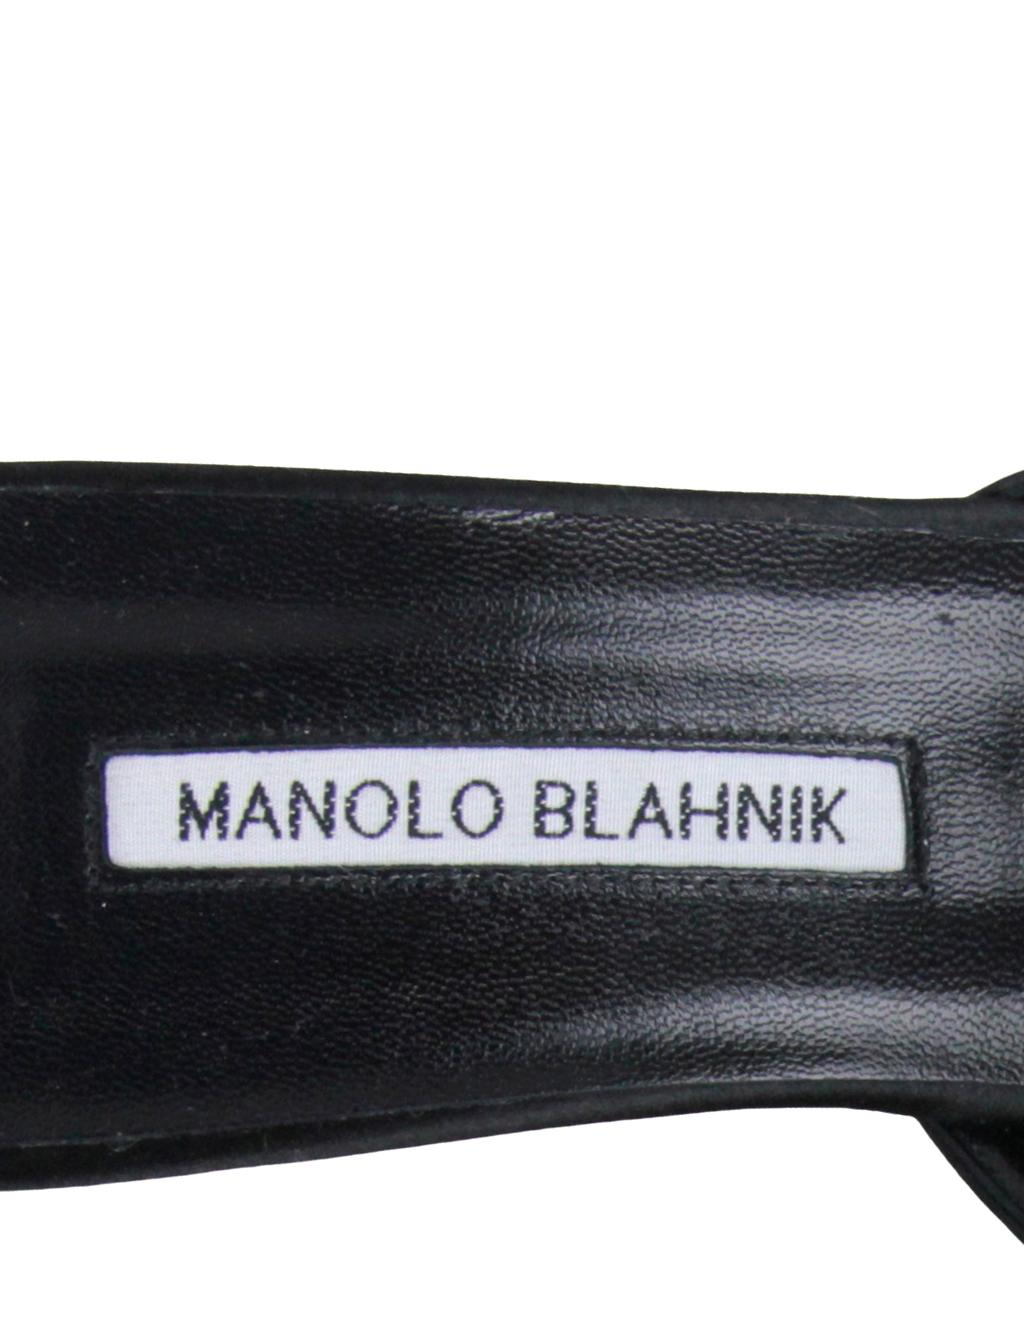 Manolo Blahnik LIKE NEW Black Satin Hangisimu Satin Mule sz 39.5 1